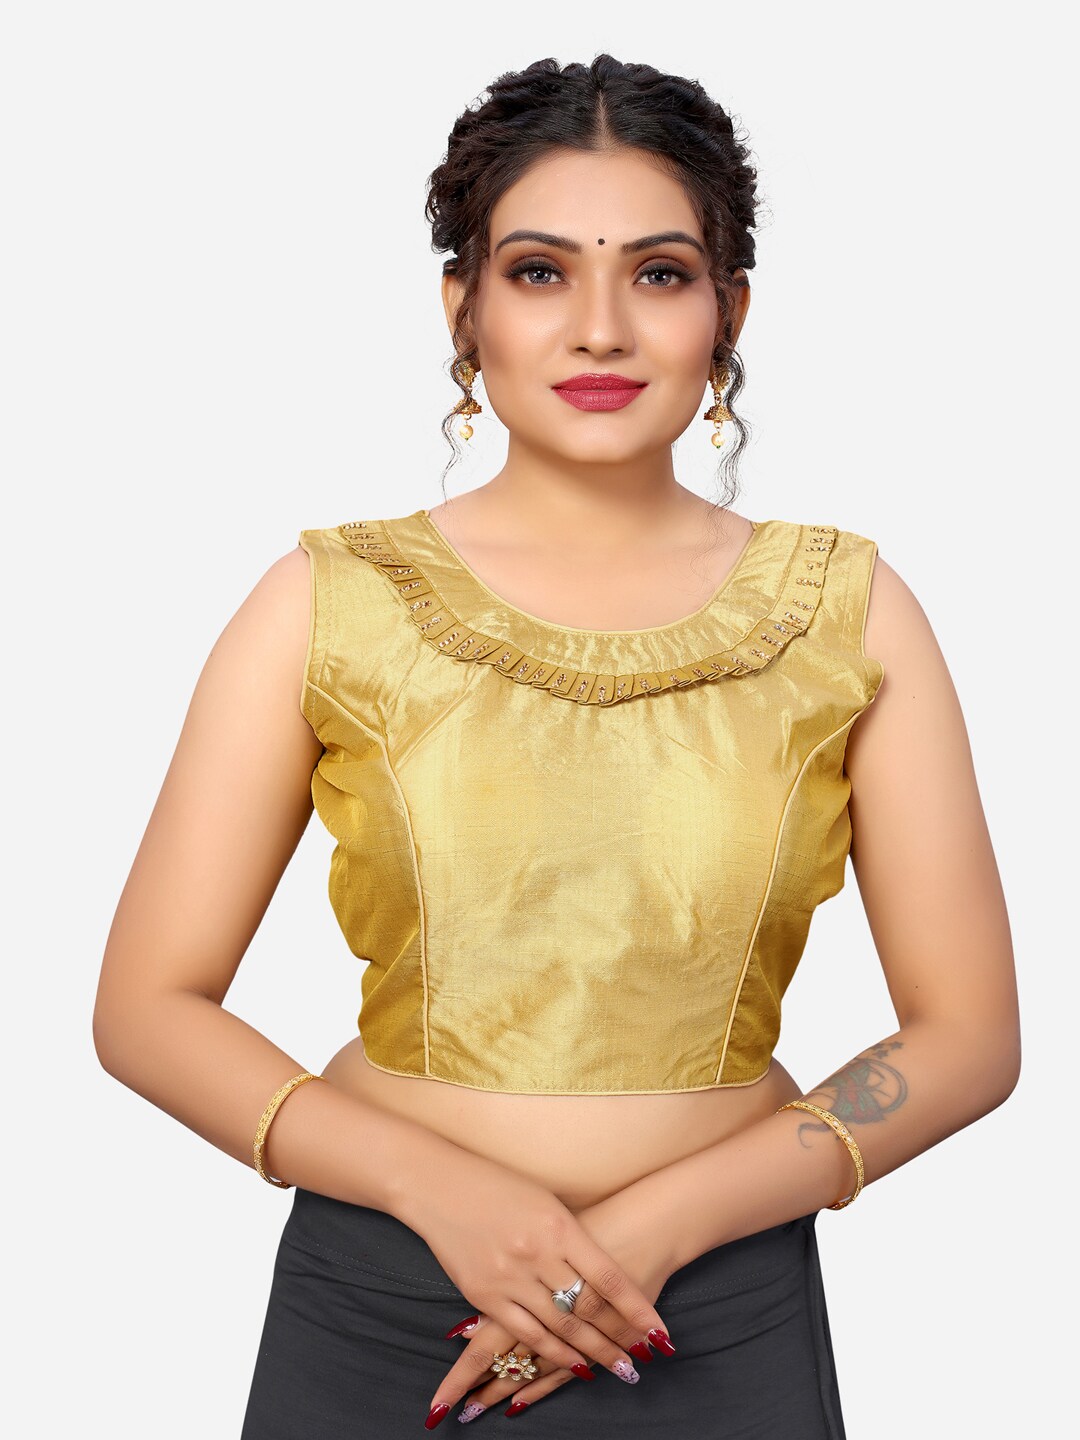 SIRIL Women Golden Embellished Saree Blouse Price in India